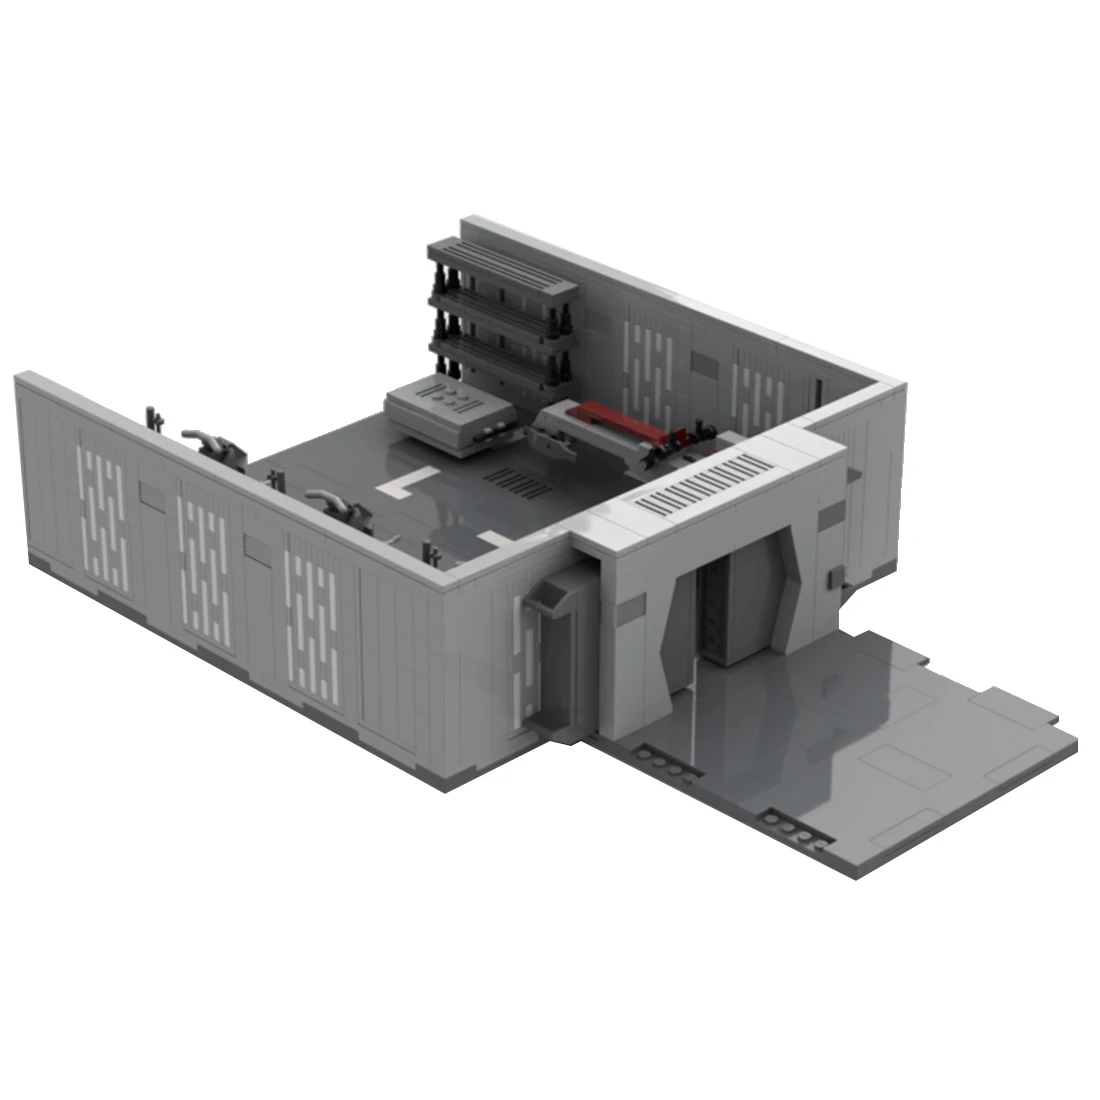 

MOC-97481 953pcs Sci-Fi Style Space Wars Modular Garage Model Building Blocks Set - By Brick_boss_pdf